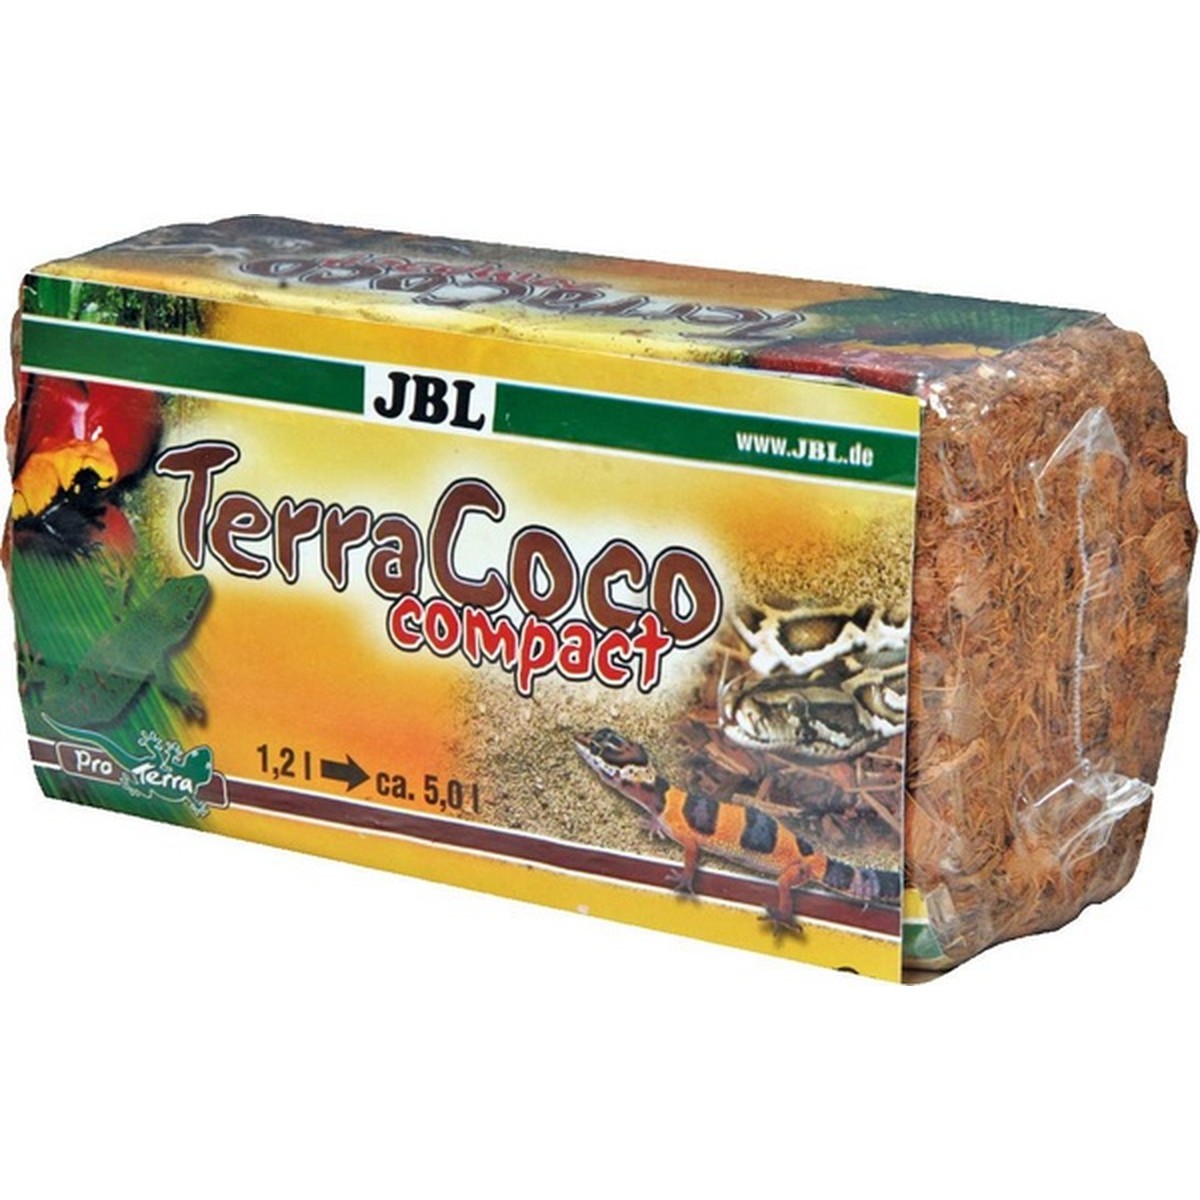   JBL TerraCoco Compact. 500 g D/GB/F/NL  500g